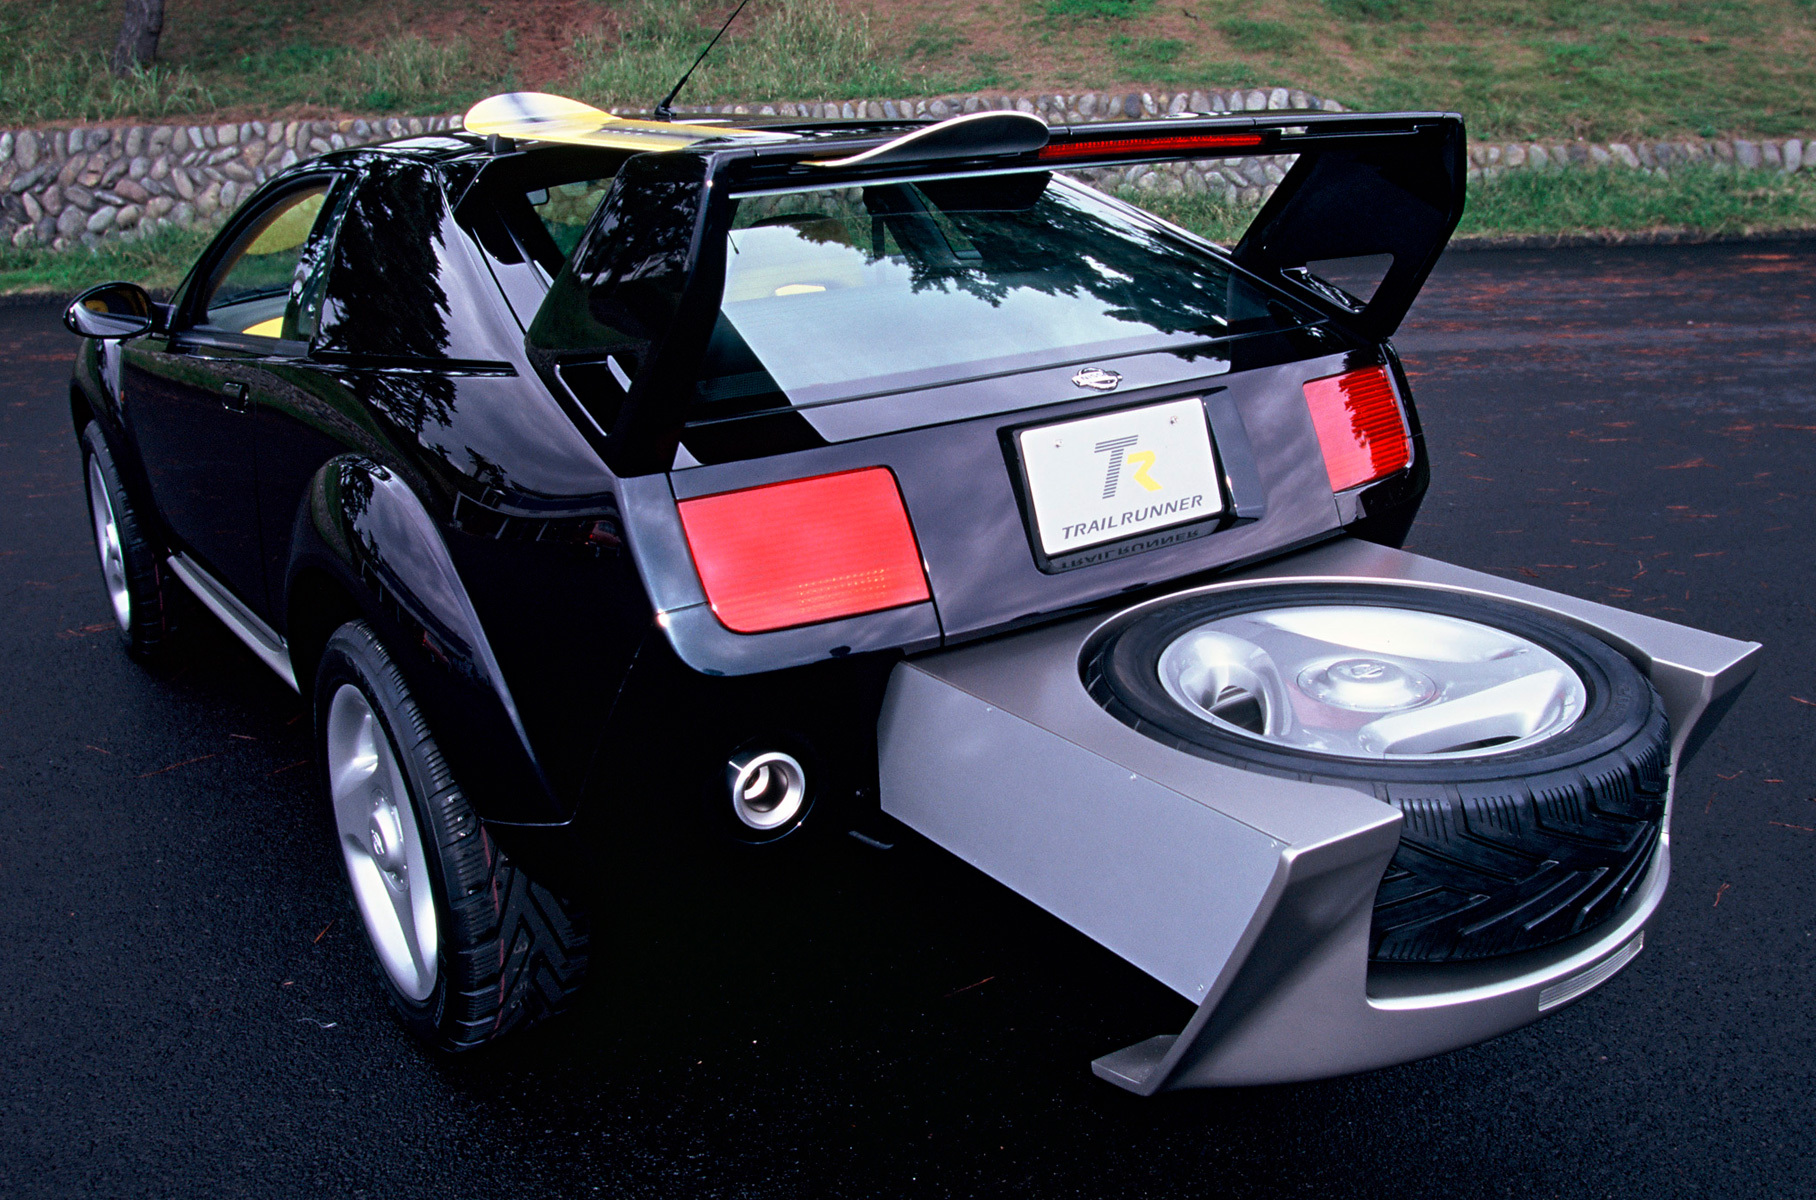 Забытые концепты: внедорожное купе Nissan Trail Runner